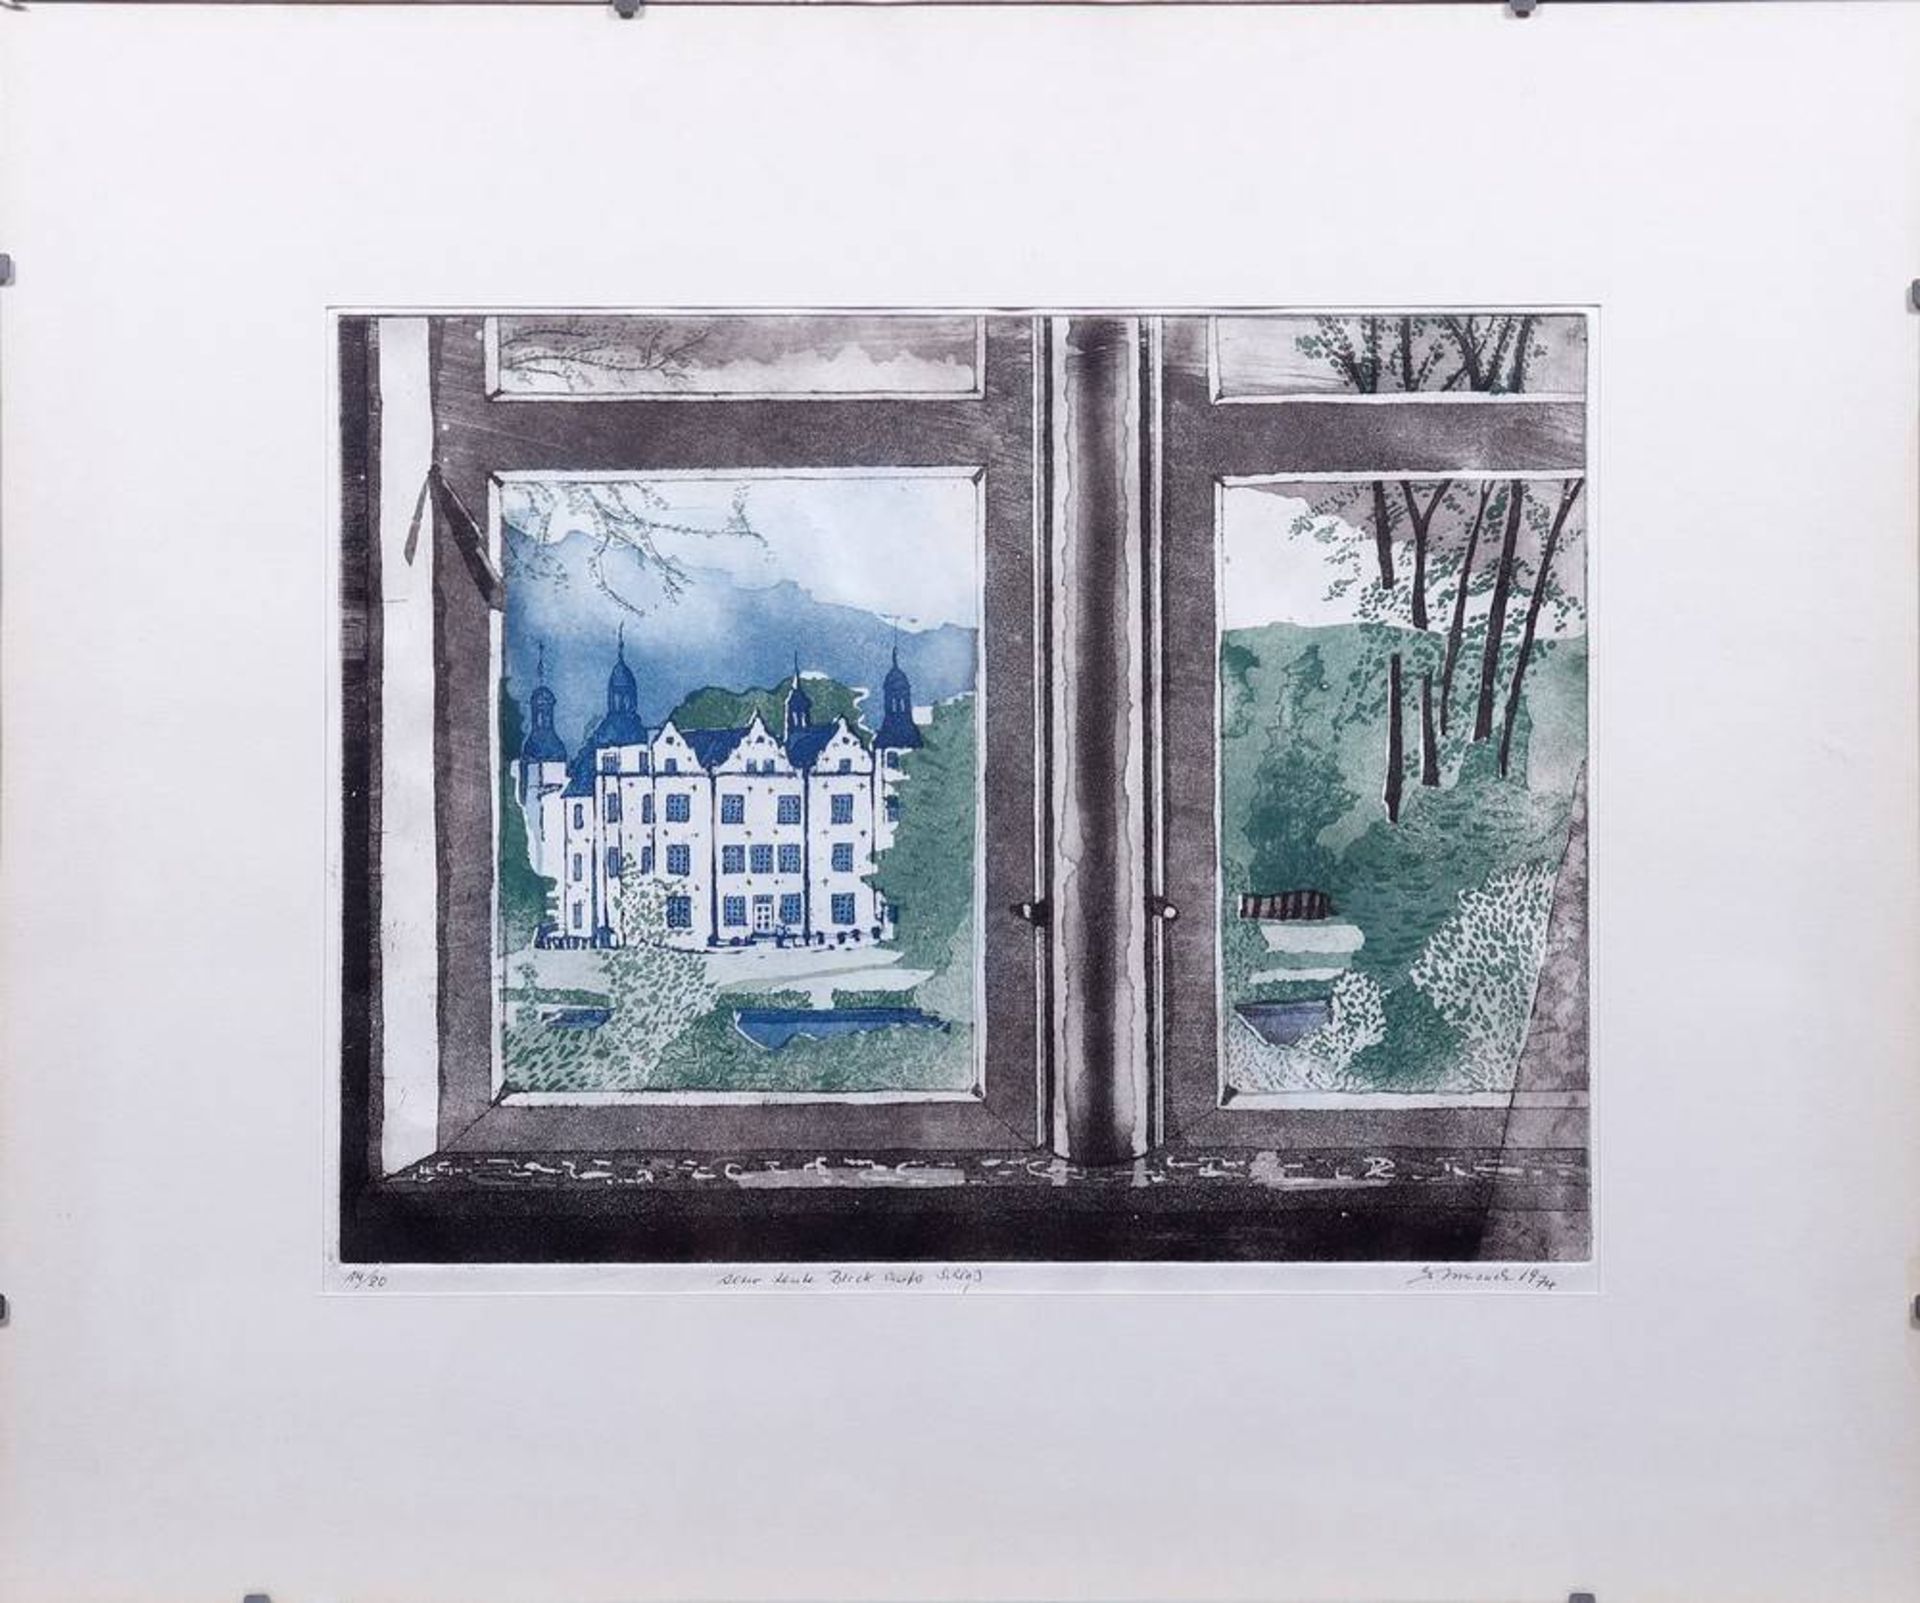 Blick durch ein Fenster aufs Ahrensburger SchlossUnbekannter Künstler, 1974, bet. "Alter Leute Blick